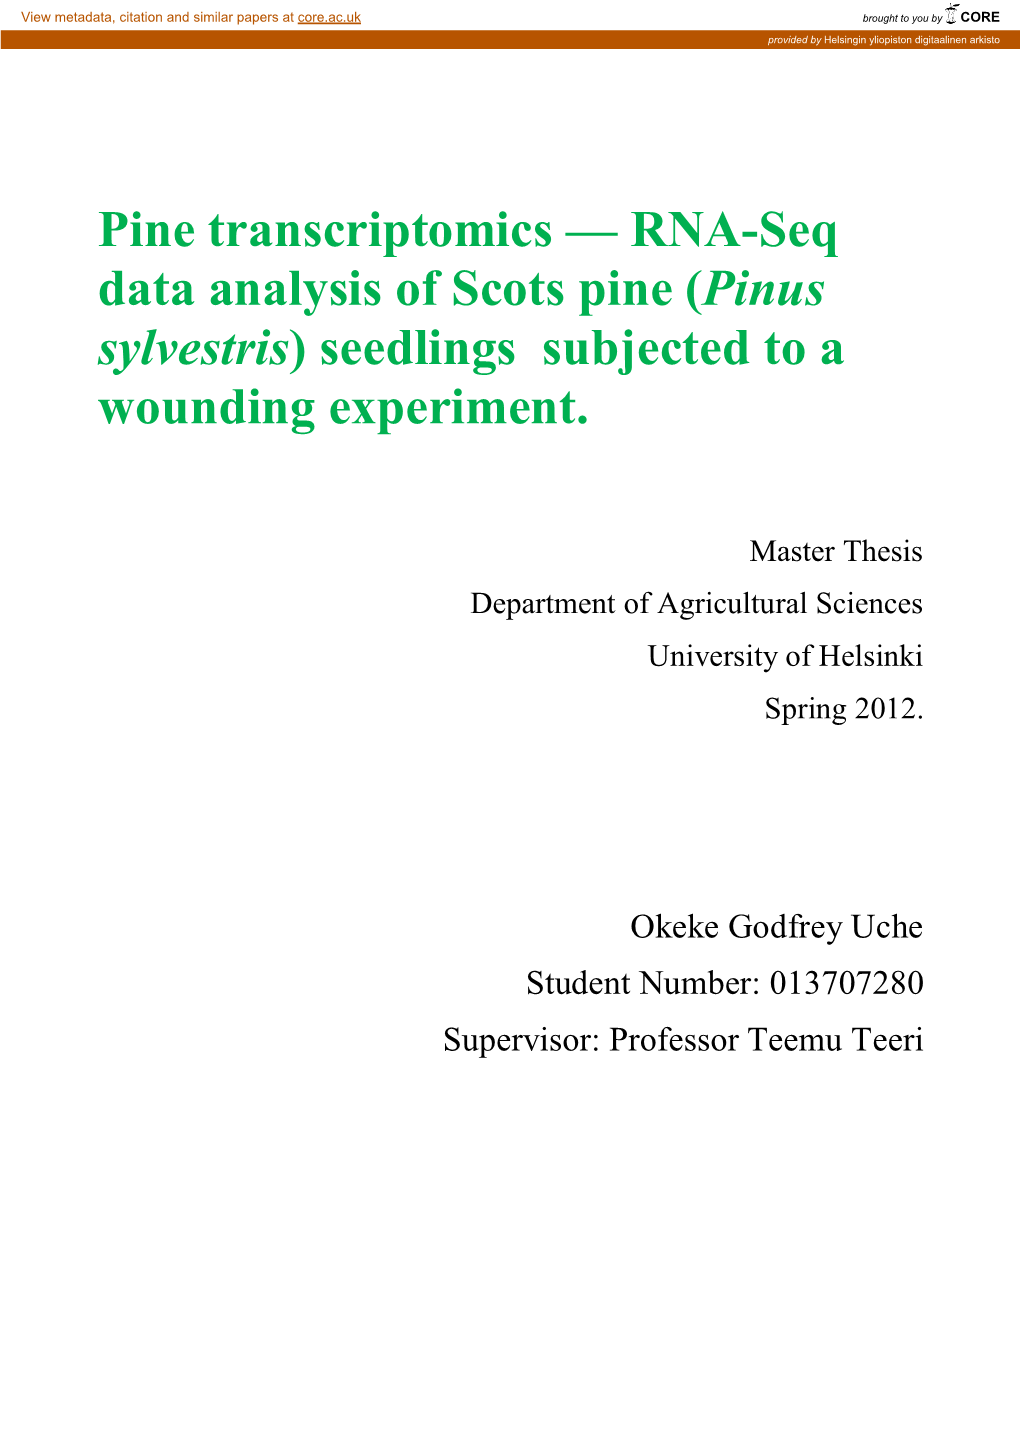 RNA-Seq Data Analysis of Scots Pine (Pinus Sylvestris) Seedlings Subjected to A